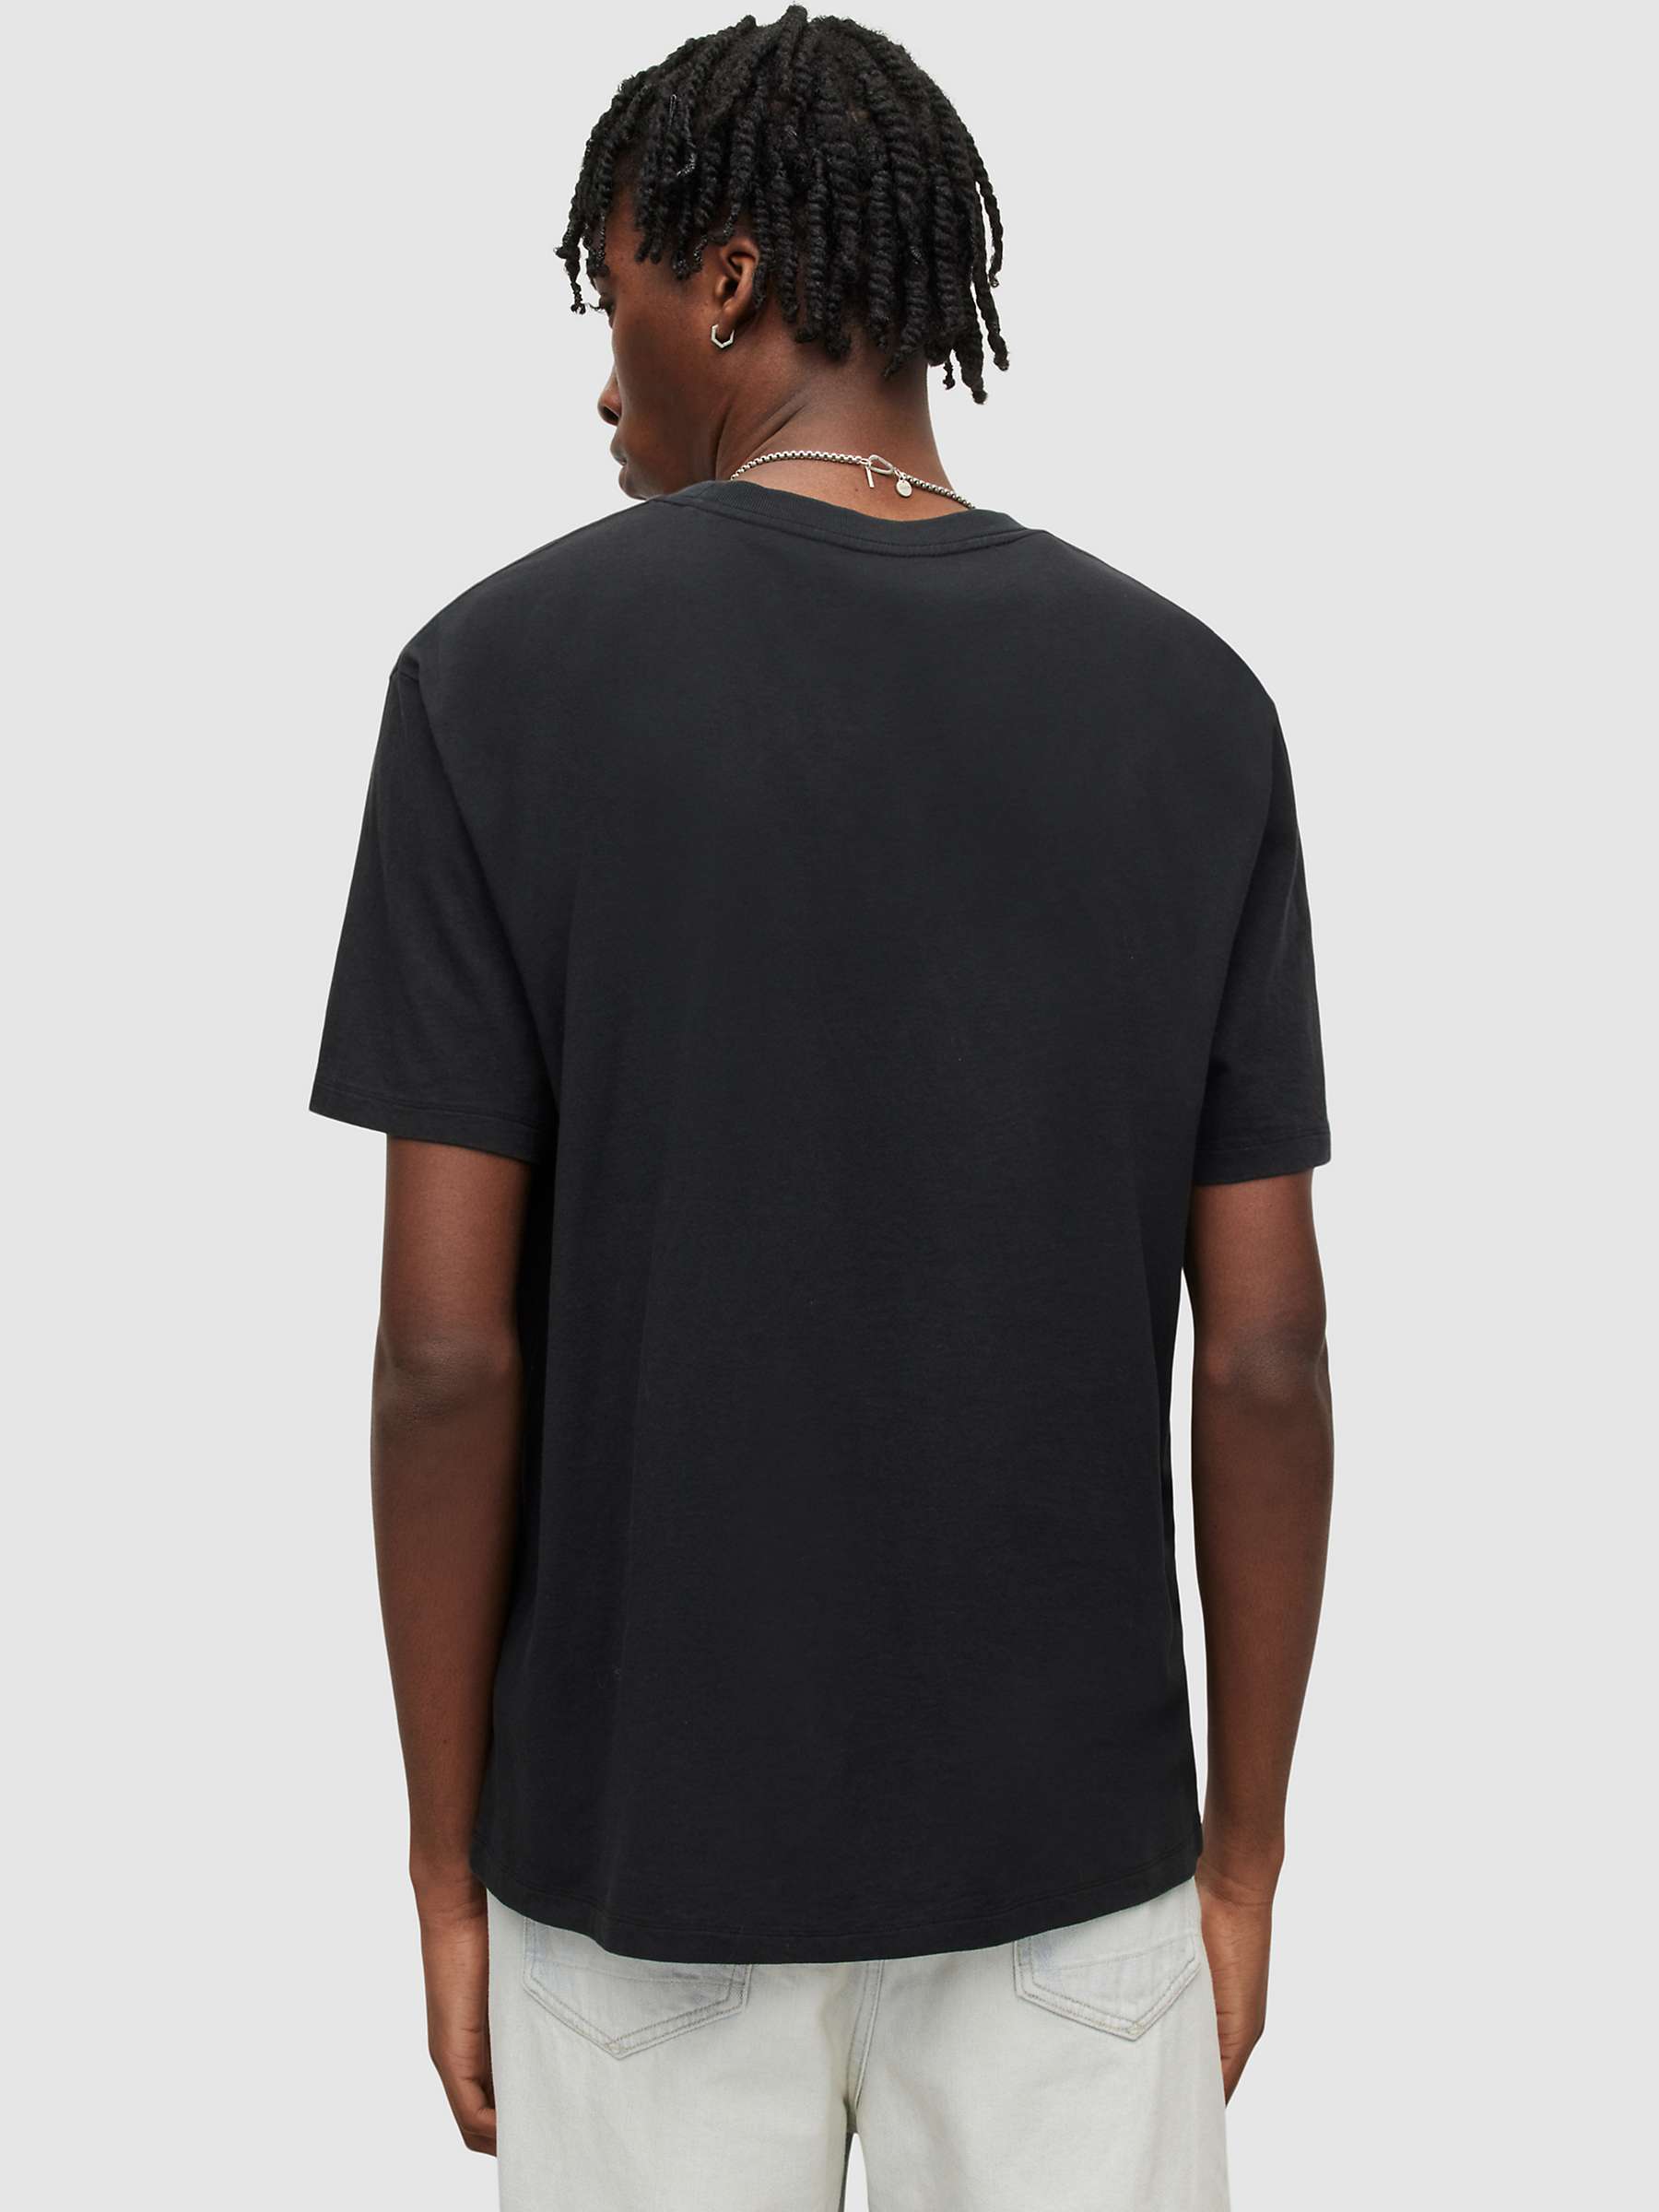 Buy AllSaints Lysergia Short Sleeve Crew T-Shirt, Black/Multi Online at johnlewis.com